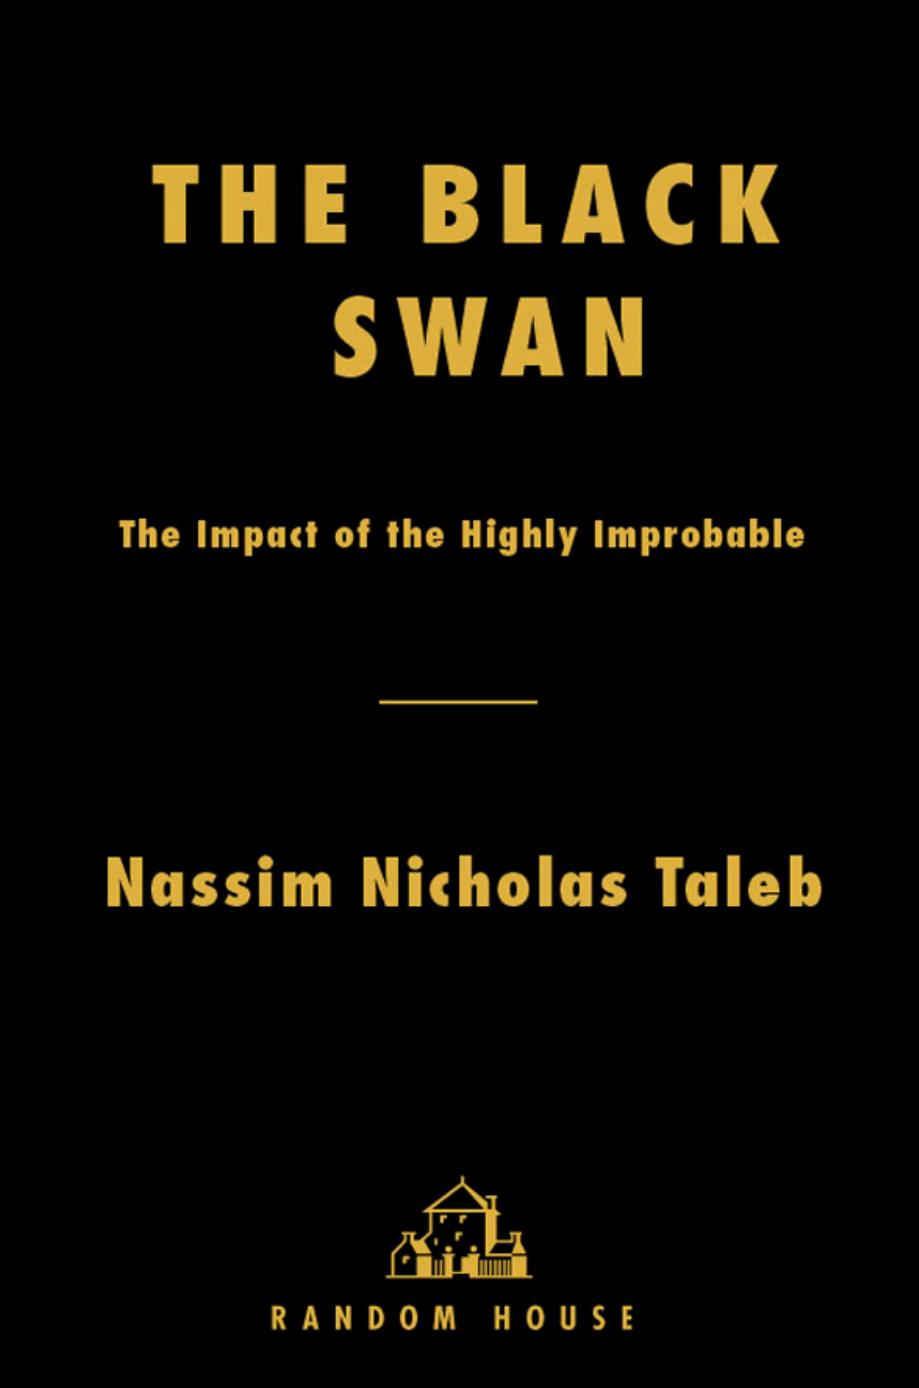 The Black Swan by Nassim Nicholas Taleb